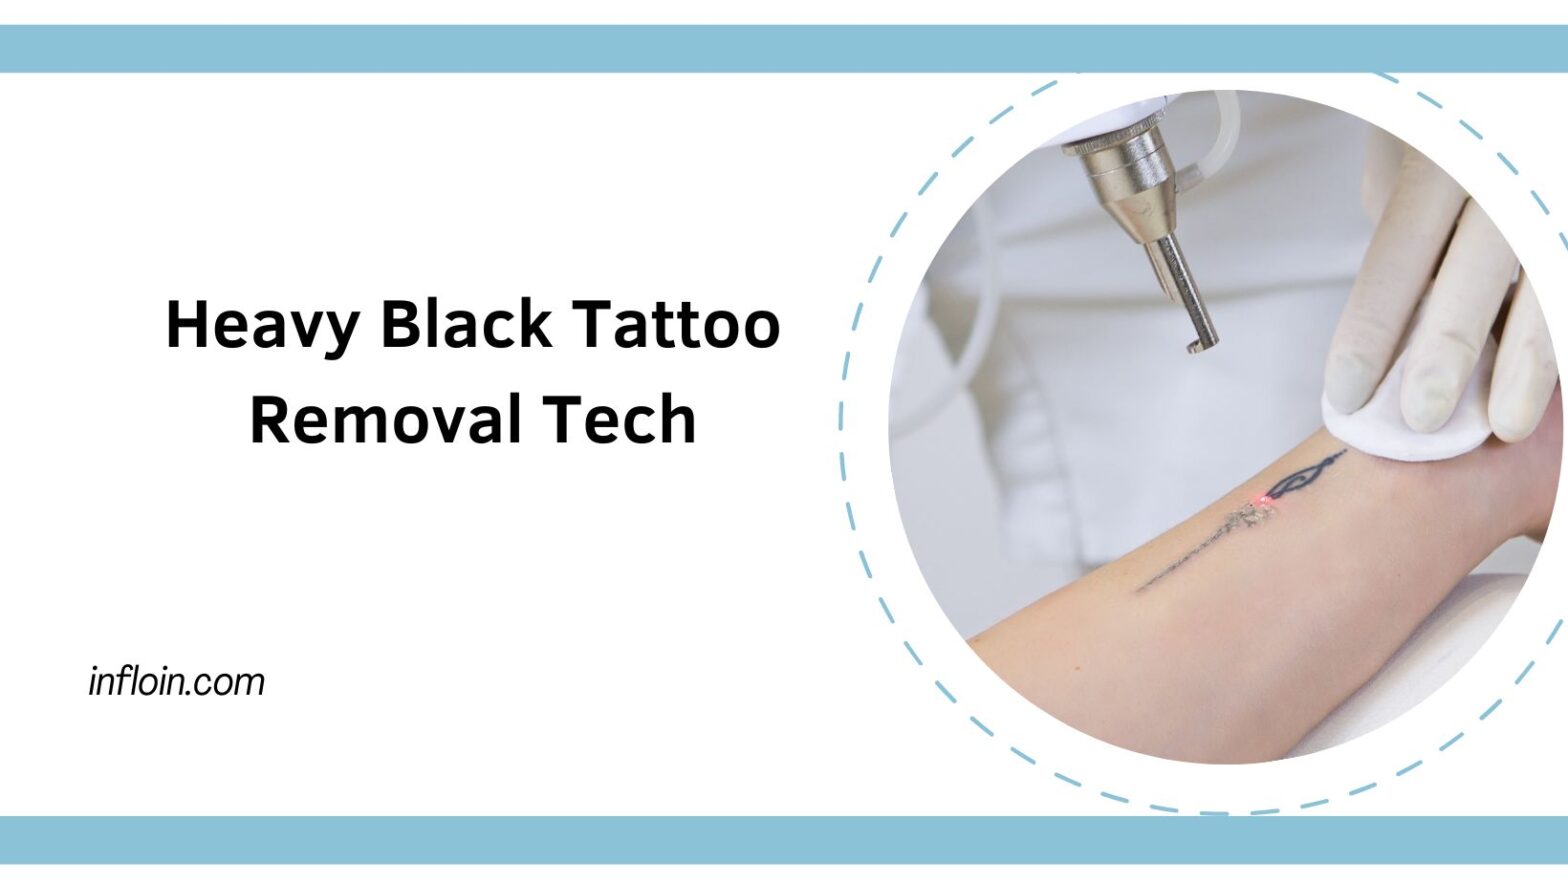 Heavy Black Tattoo Removal